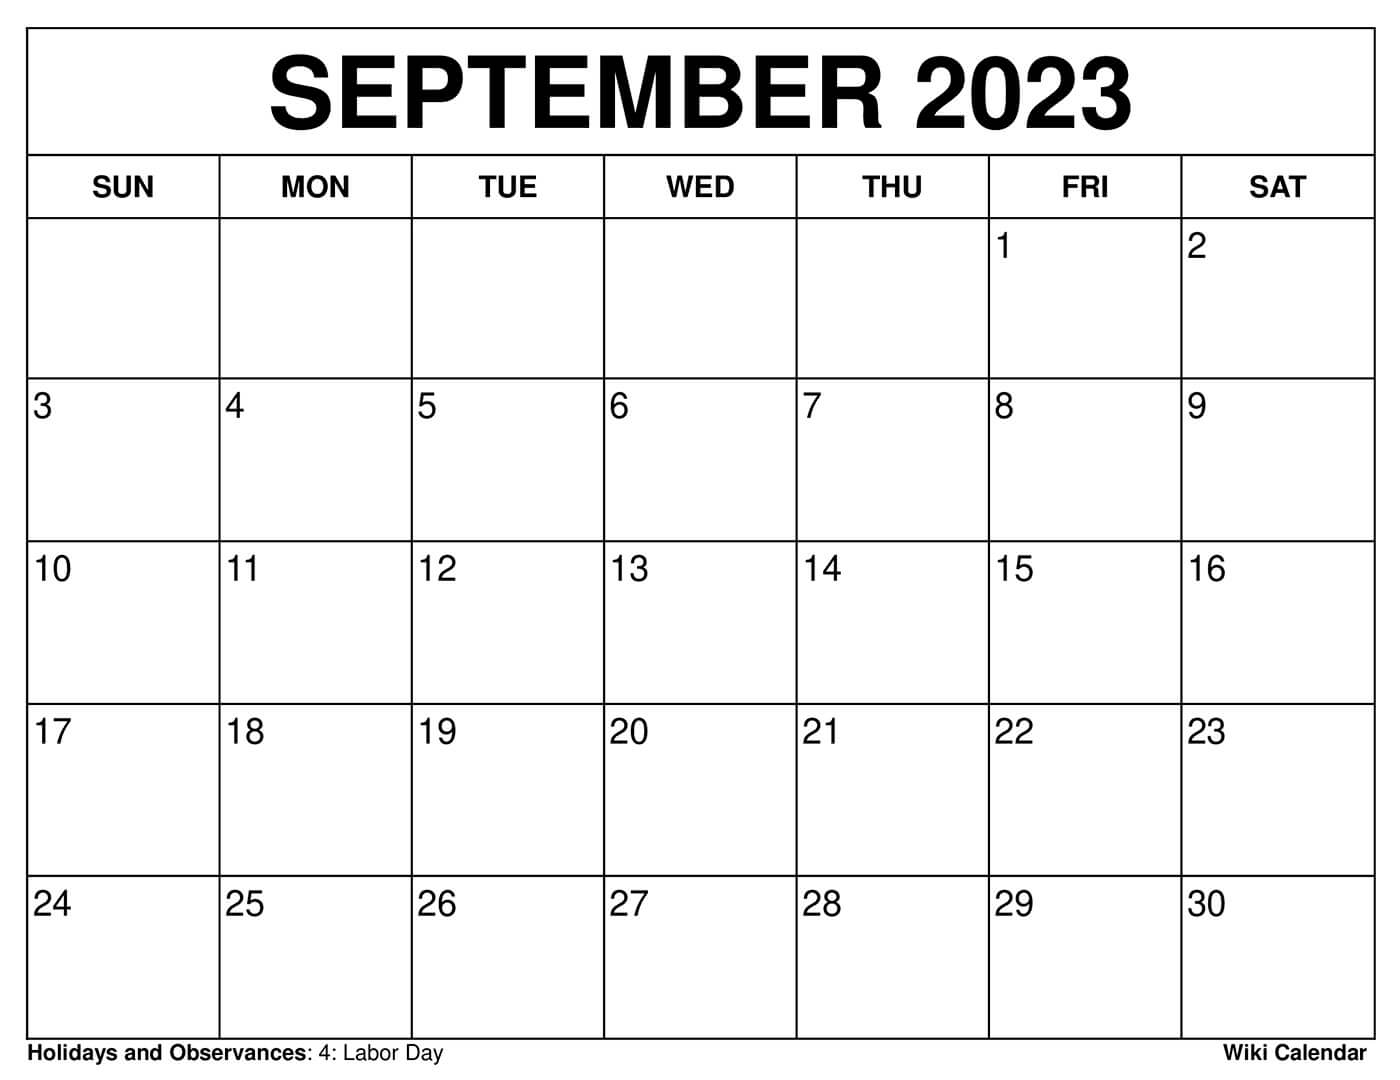 Sep 2022 Calendar Free Printable September 2022 Calendars - Wiki Calendar